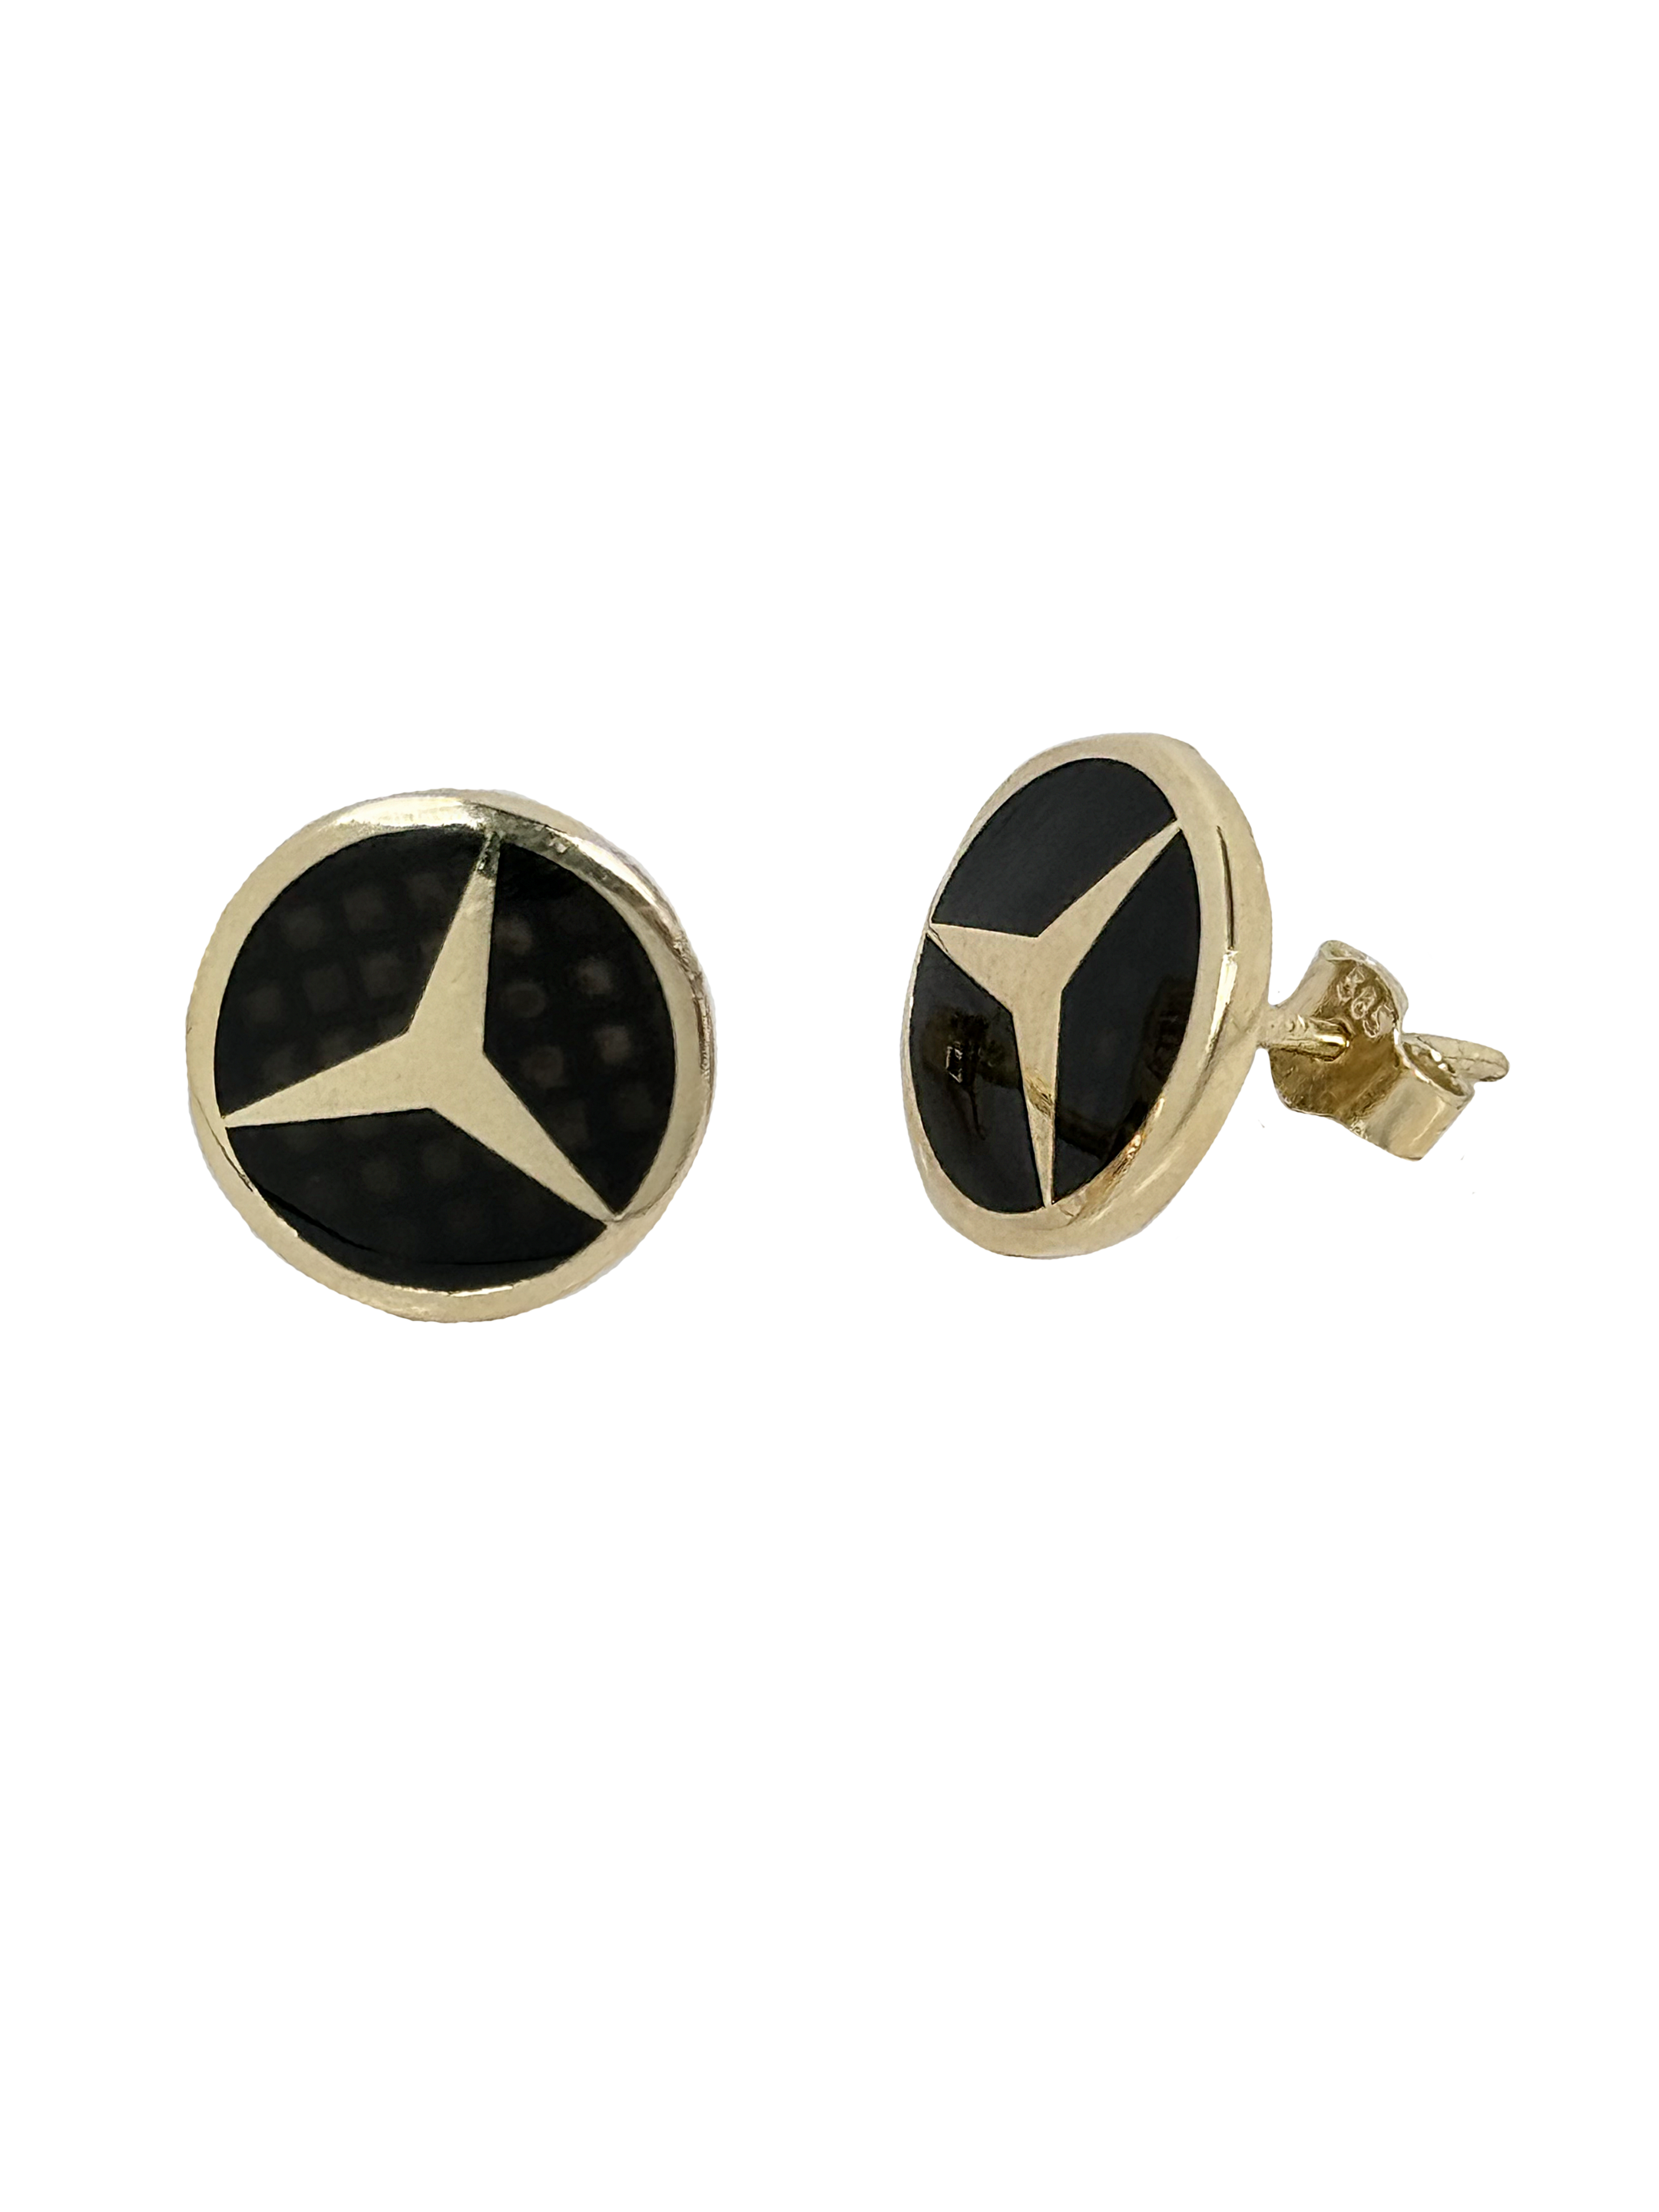 Gold car logo earrings with black onyx